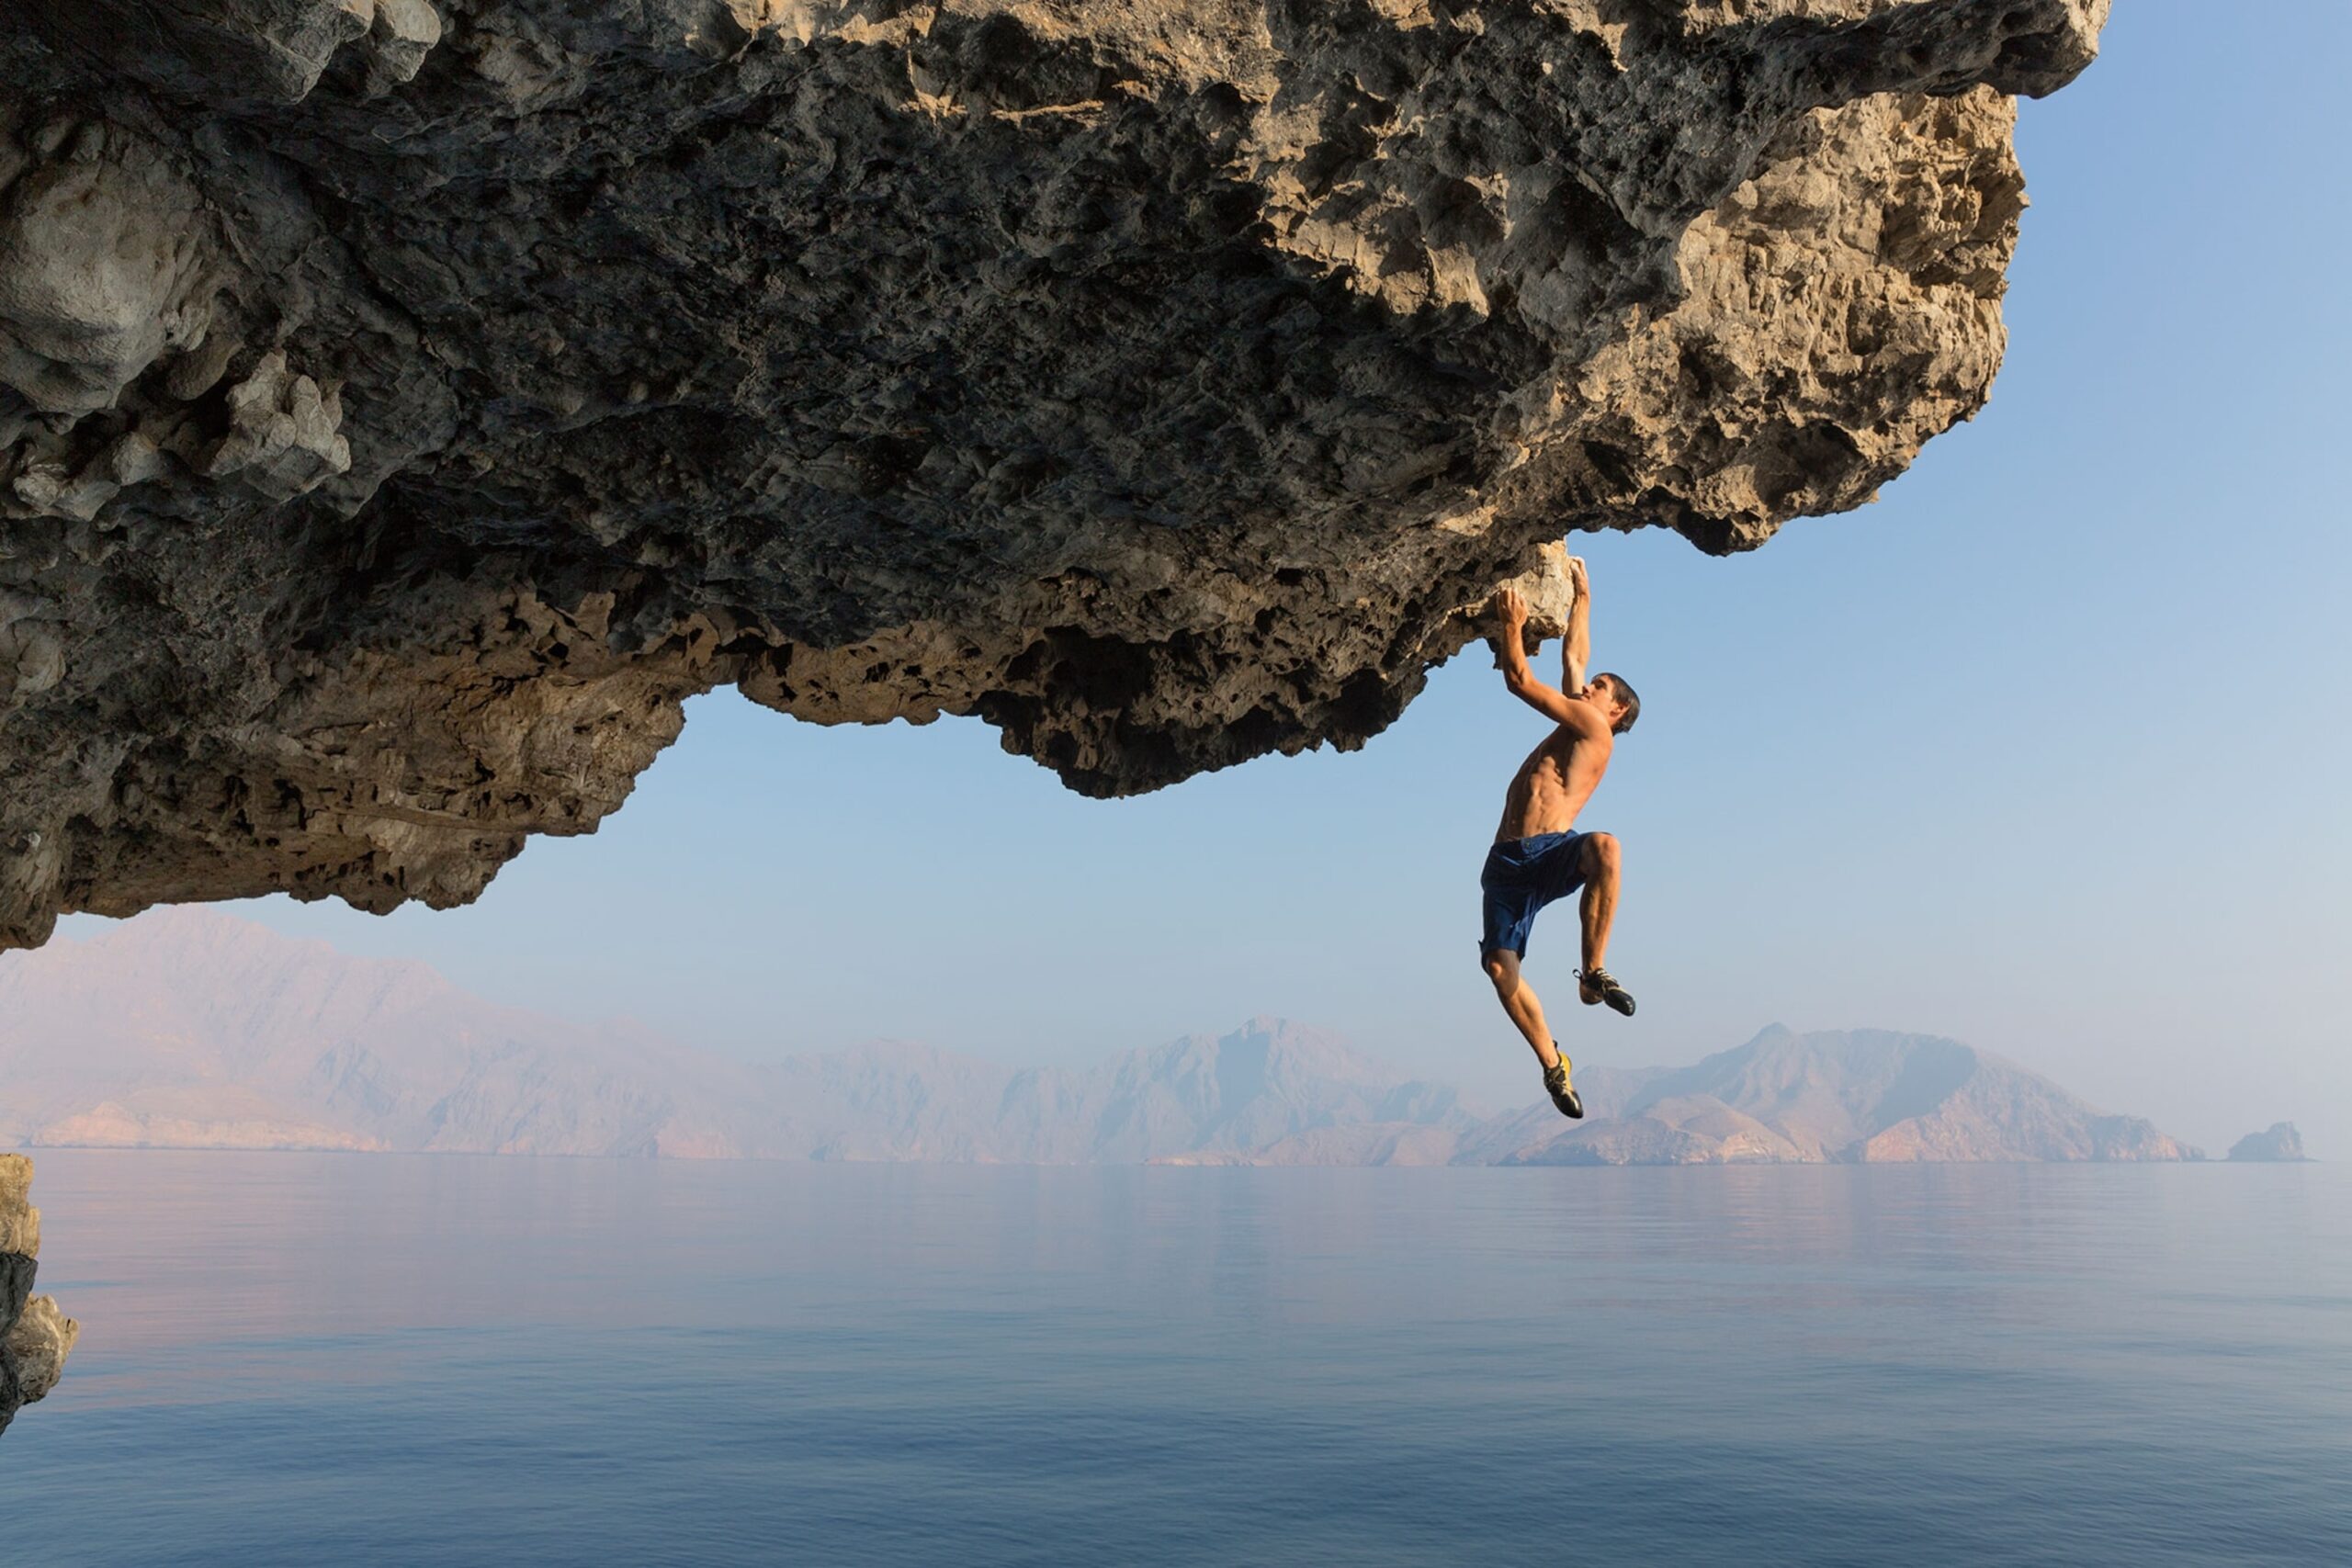 Alex Honnold rock climbing on a steep overhang over the ocean